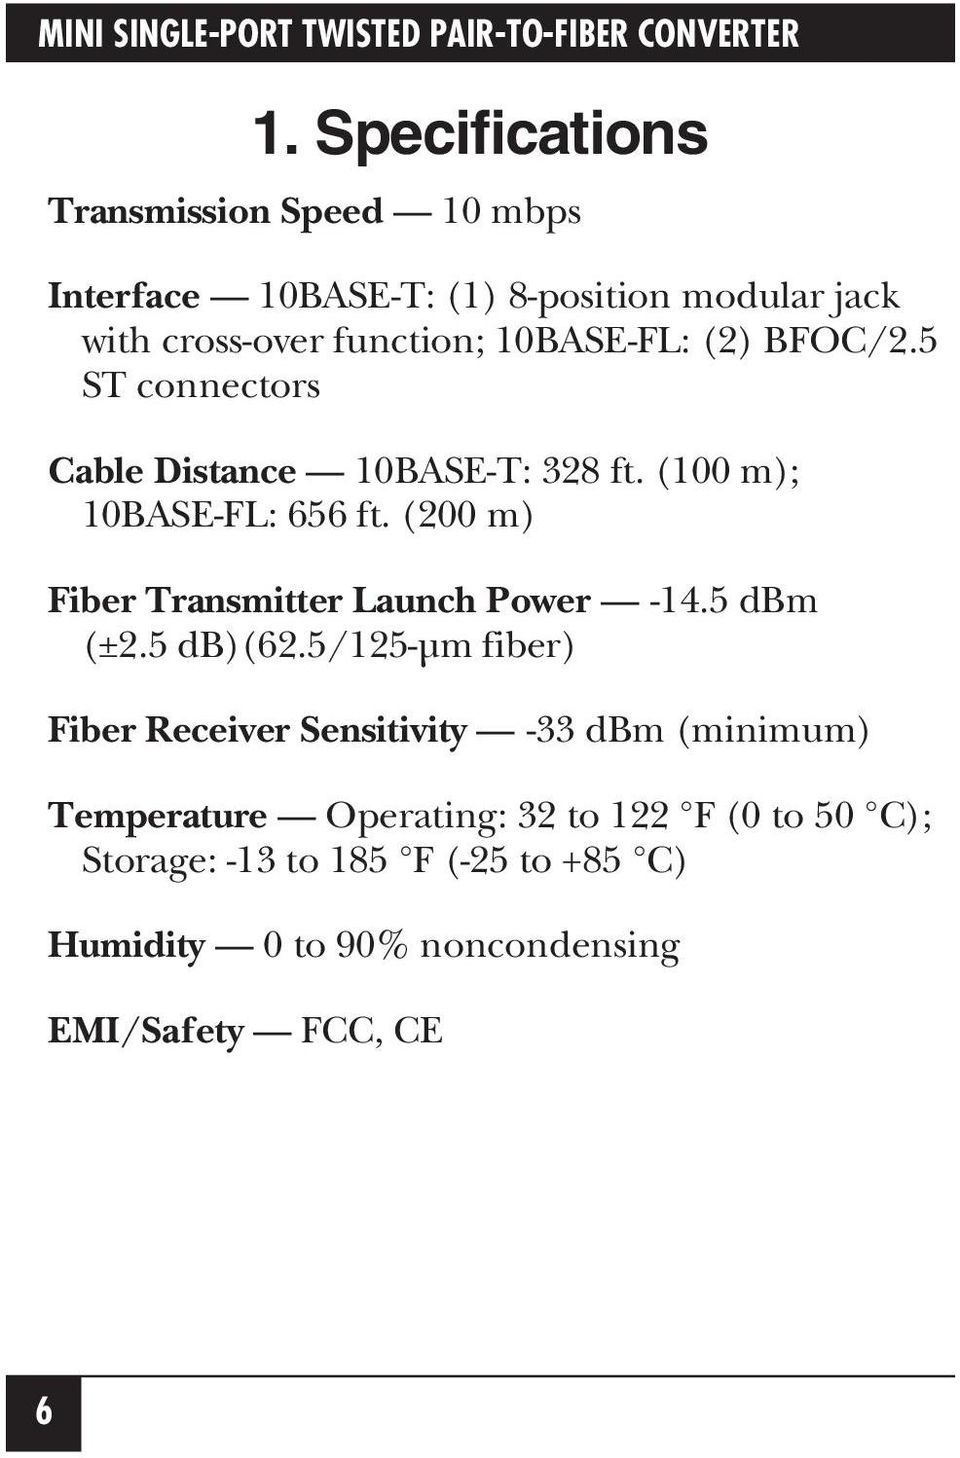 (200 m) Fiber Transmitter Launch Power -14.5 dbm (±2.5 db)(62.